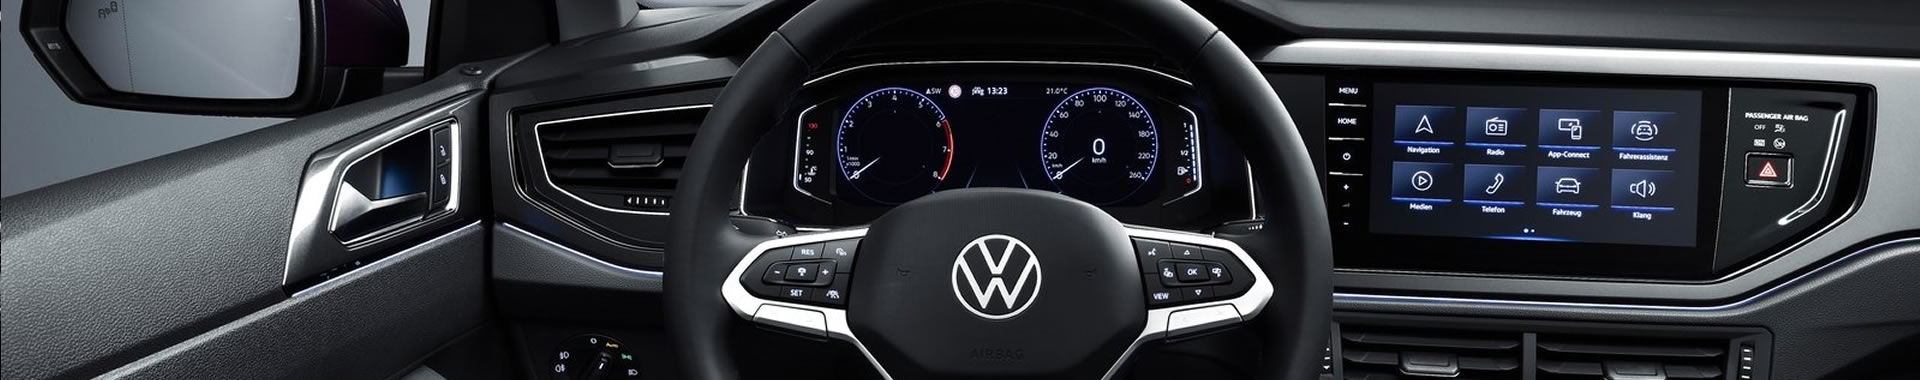 VW Polo Cockpit